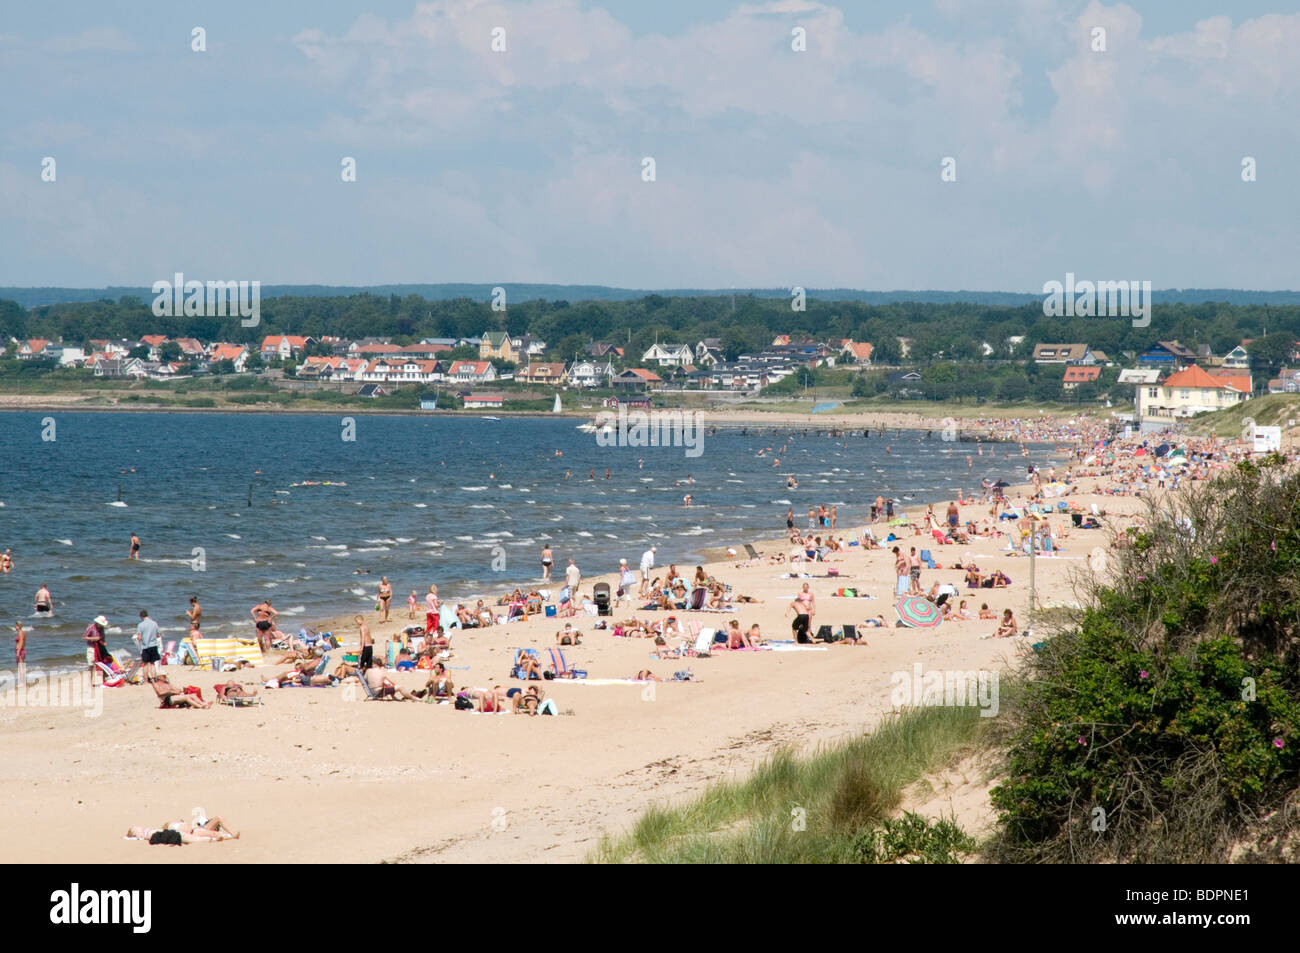 Angelholm in Skåne Svezia meridionale estate svezia svedese spiagge spiaggia di South Western west un clima caldo e sole nord europ Foto Stock